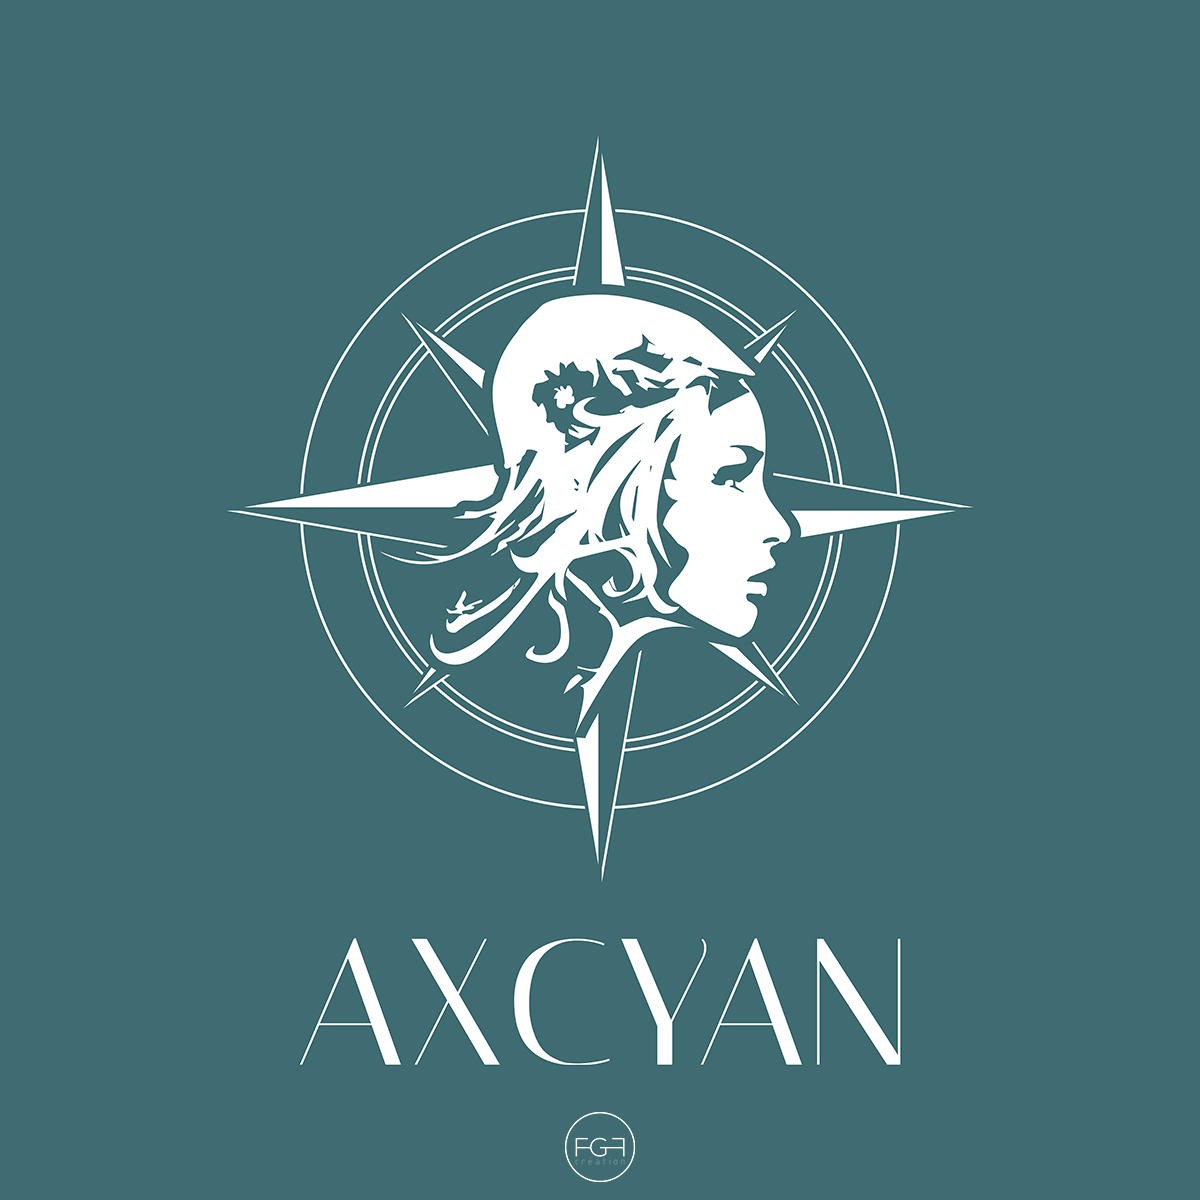 Axcyan, identité visuelle